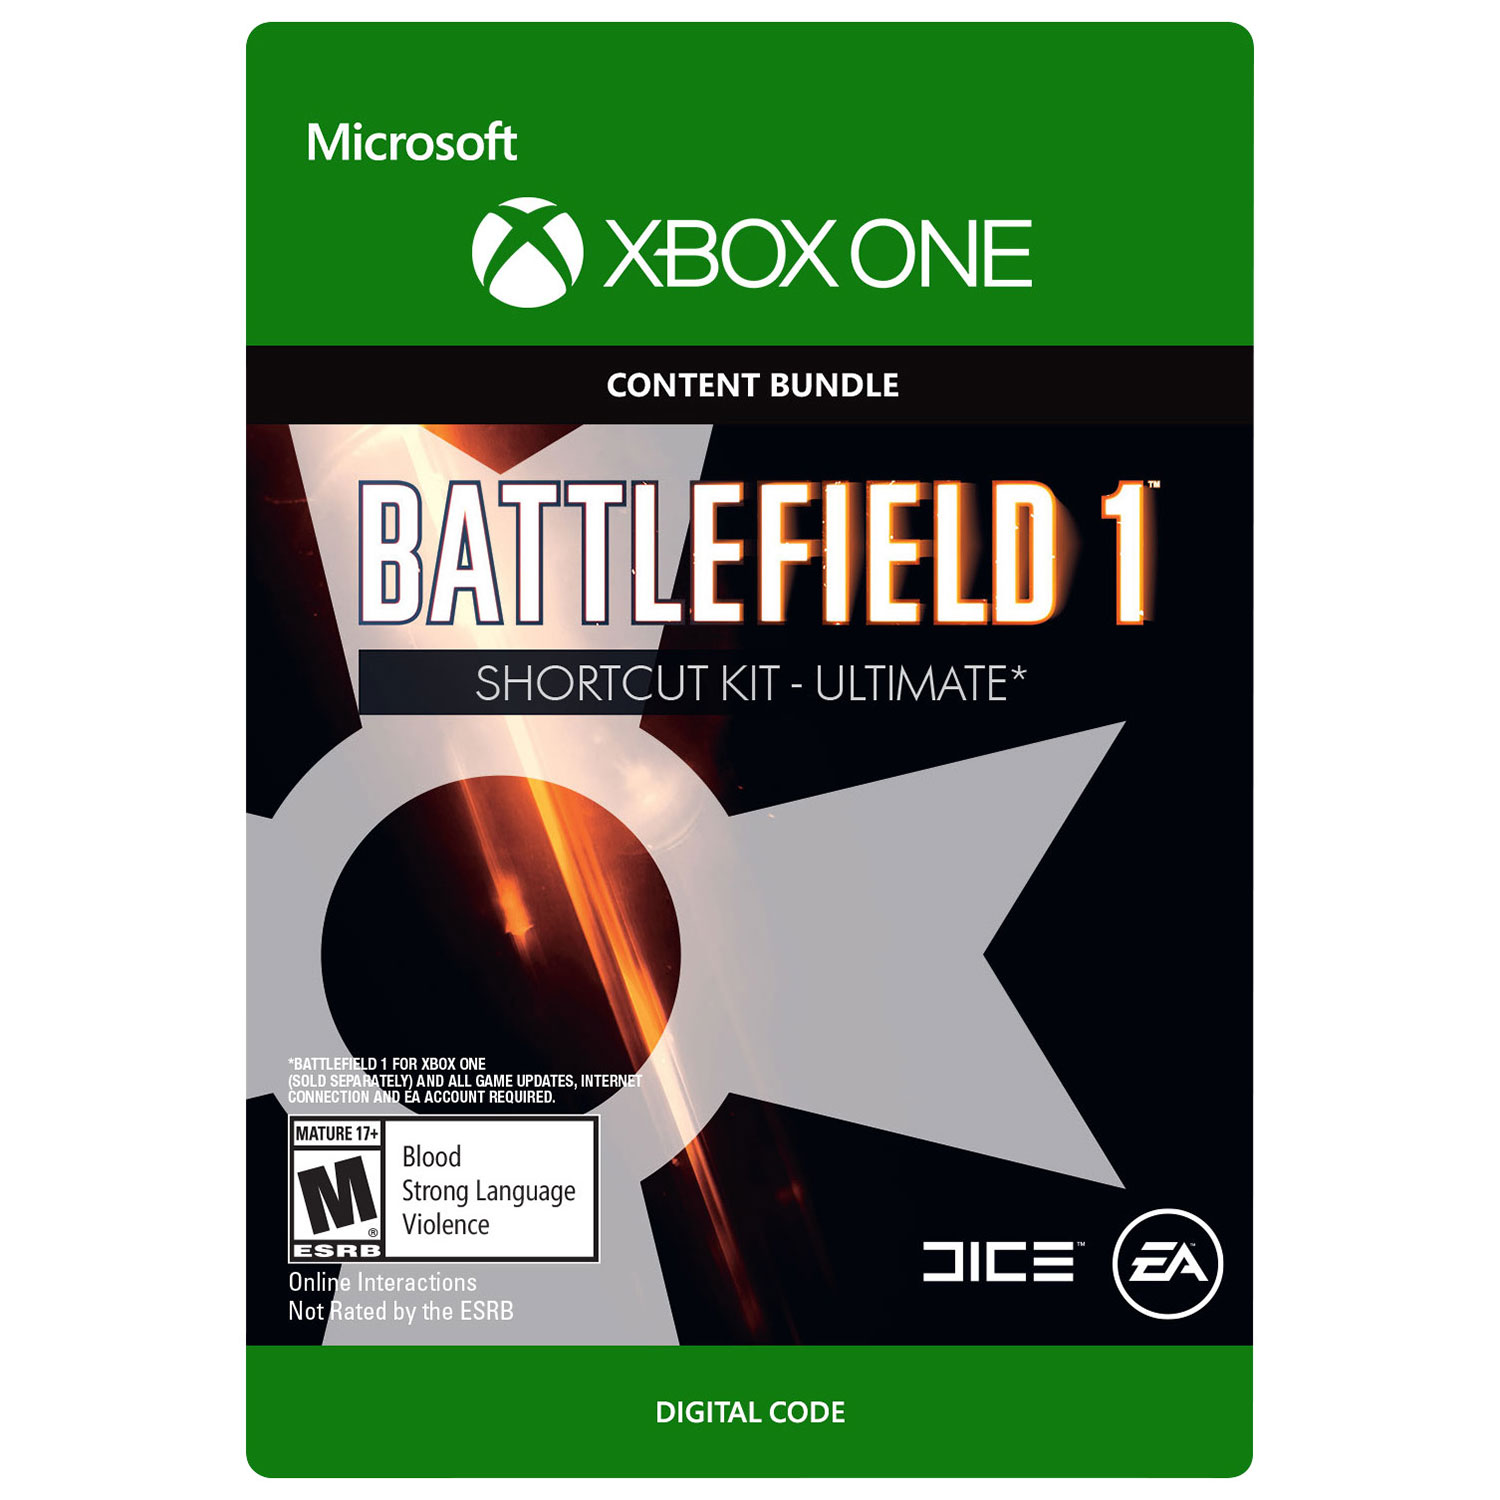 Battlefield 1 Shortcut Kit: Ultimate Bundle (Xbox One) - Digital Download